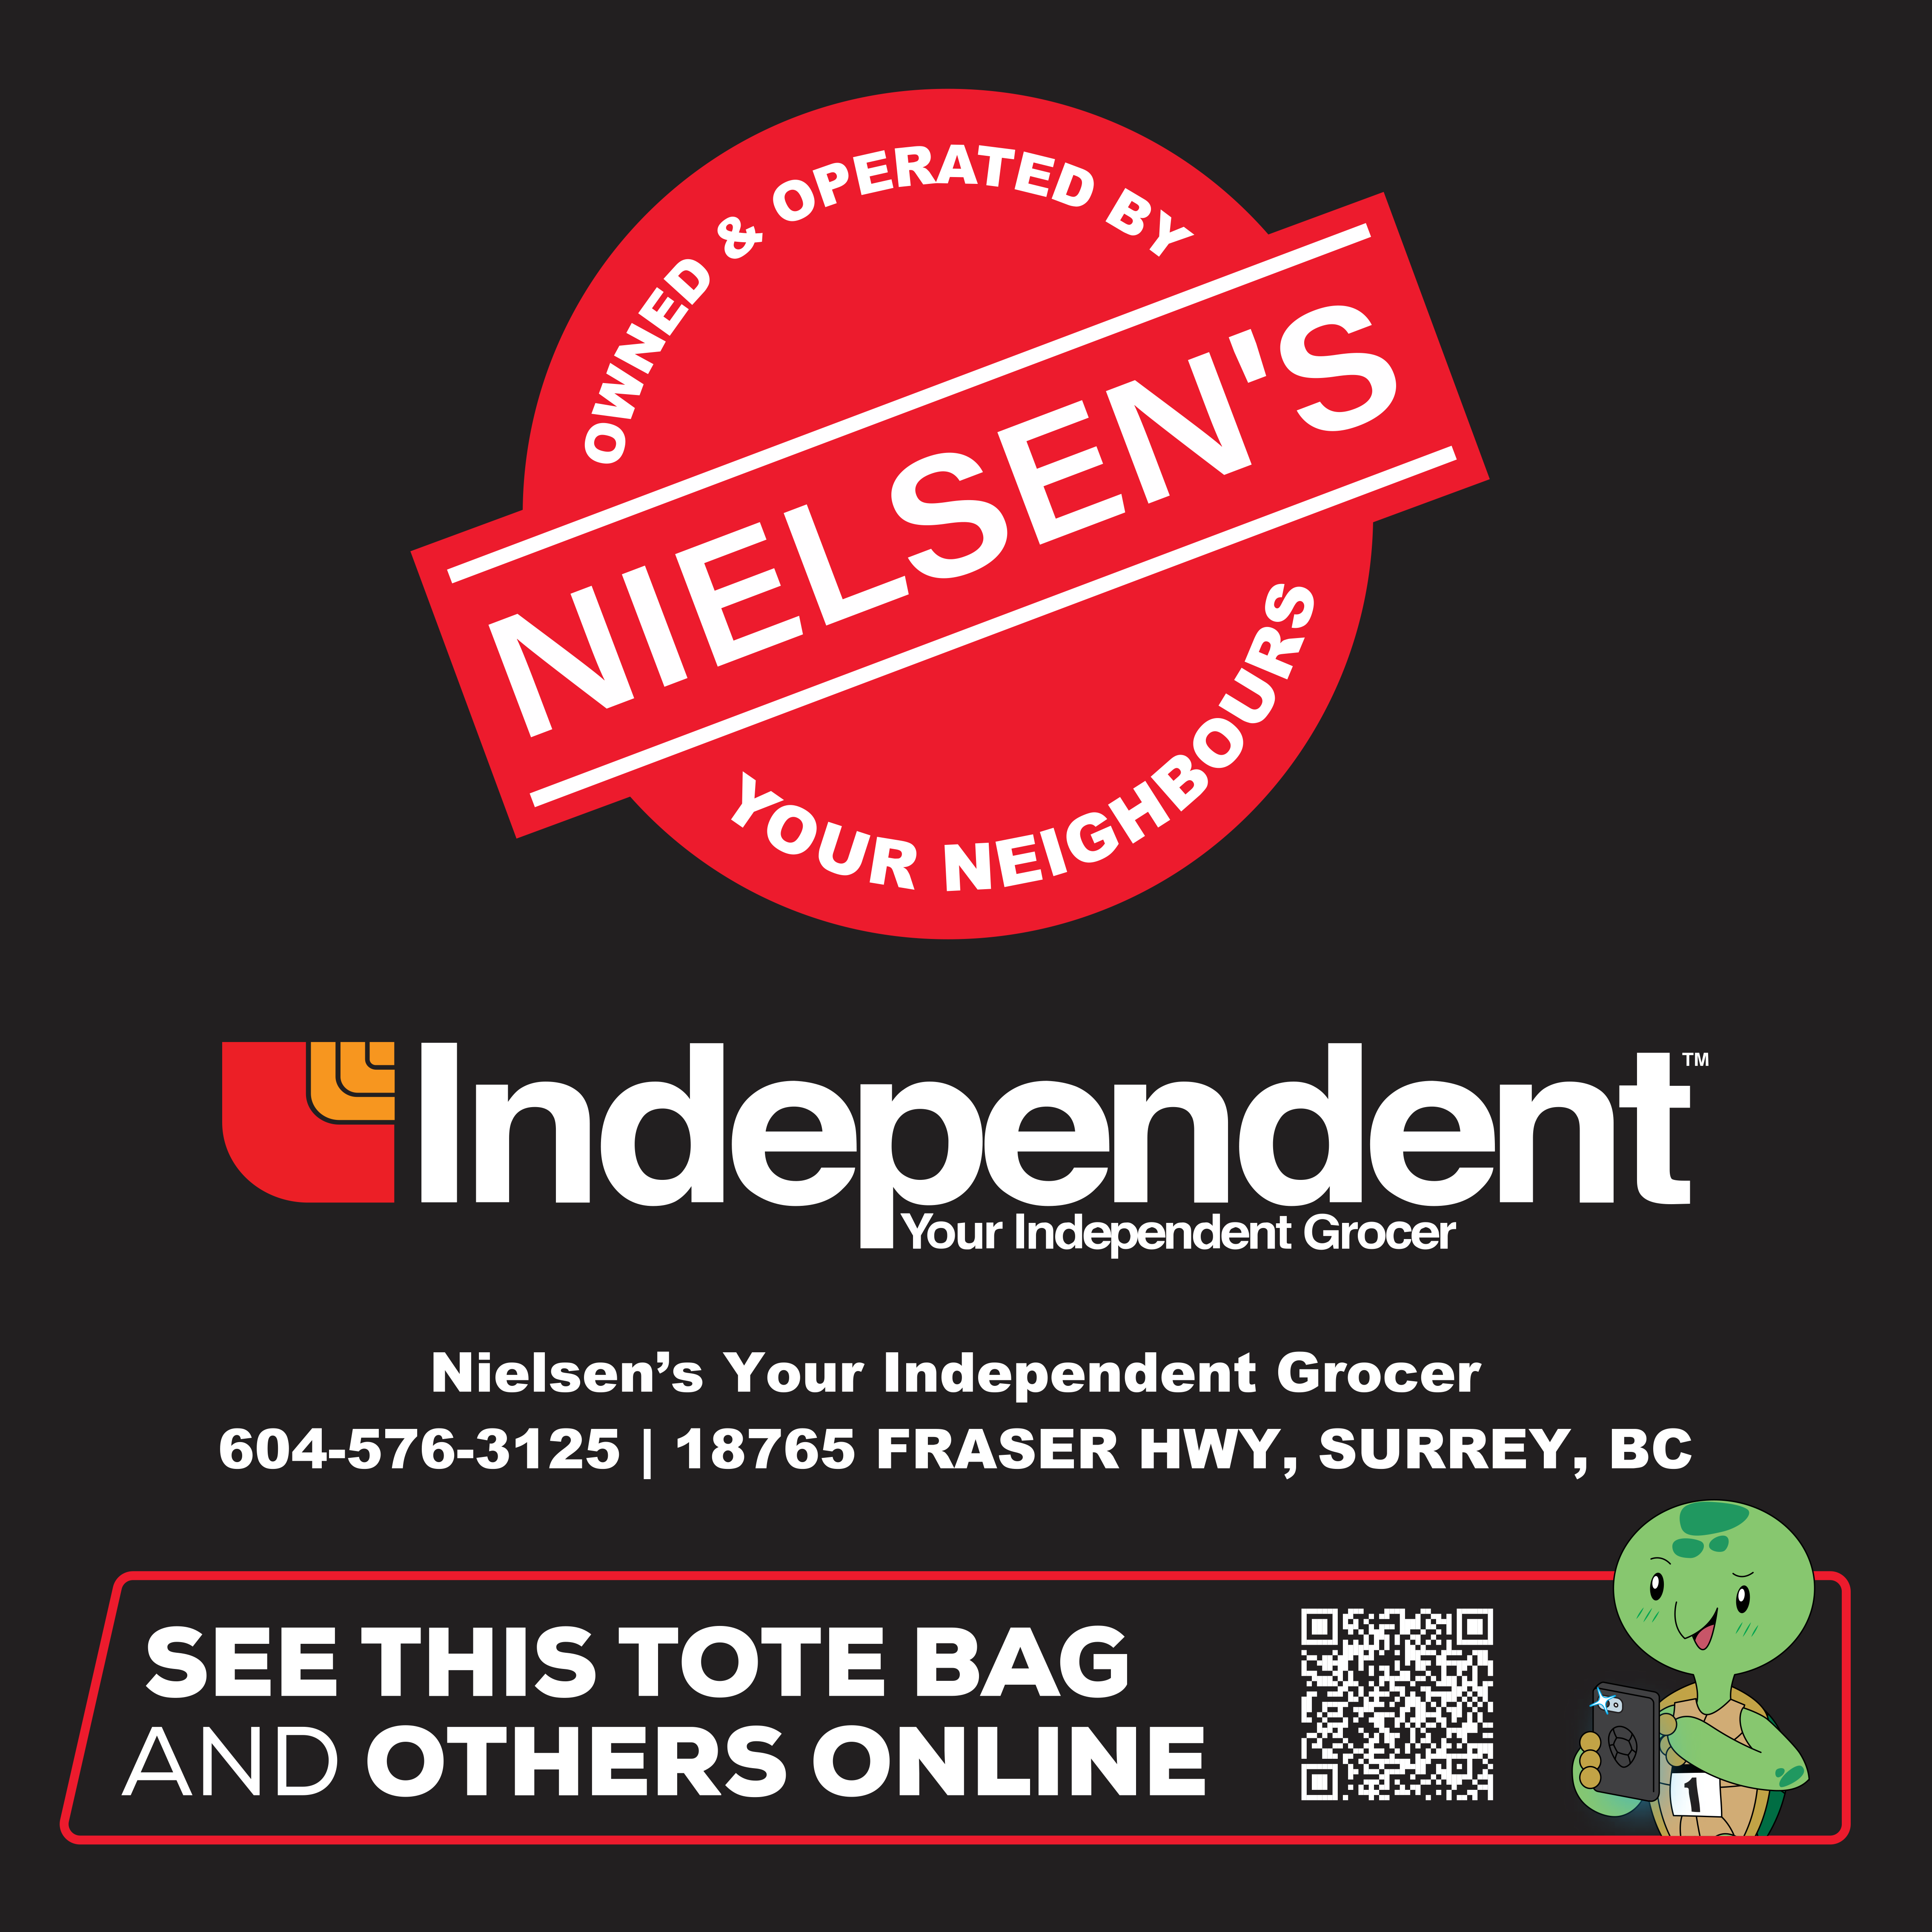 Nielsen's Your Independent